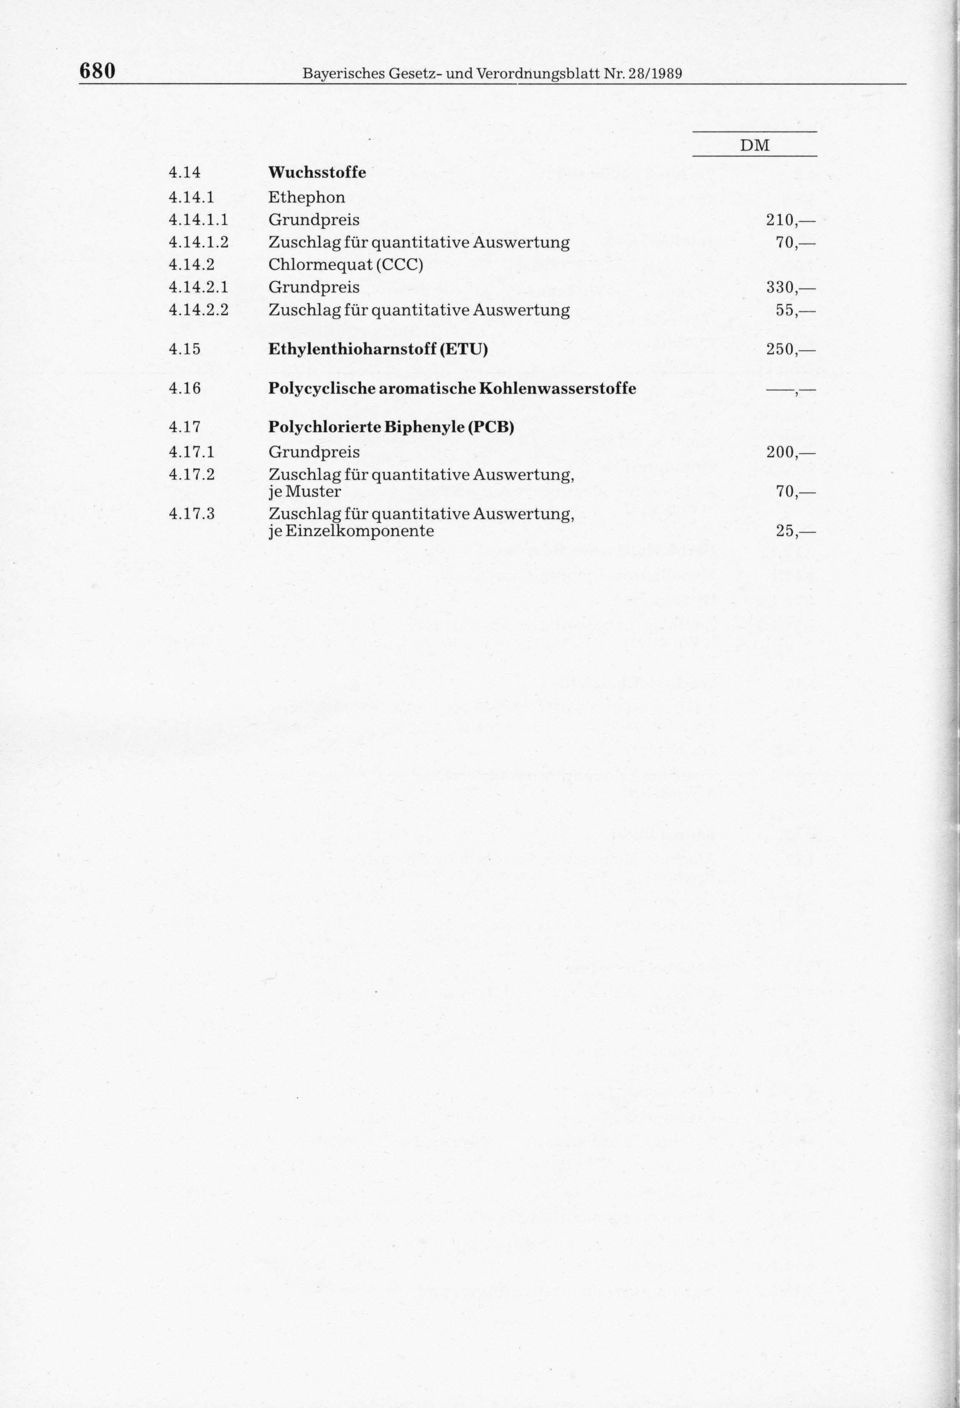 15 Ethylenthioharnstoff (ETU) 250,- 4.16 Polycyclische aromatische Kohlenwasserstoffe -,- 4.17 Polychlorierte Biphenyle (PCB) 4.17.1 Grundpreis 200,- 4.